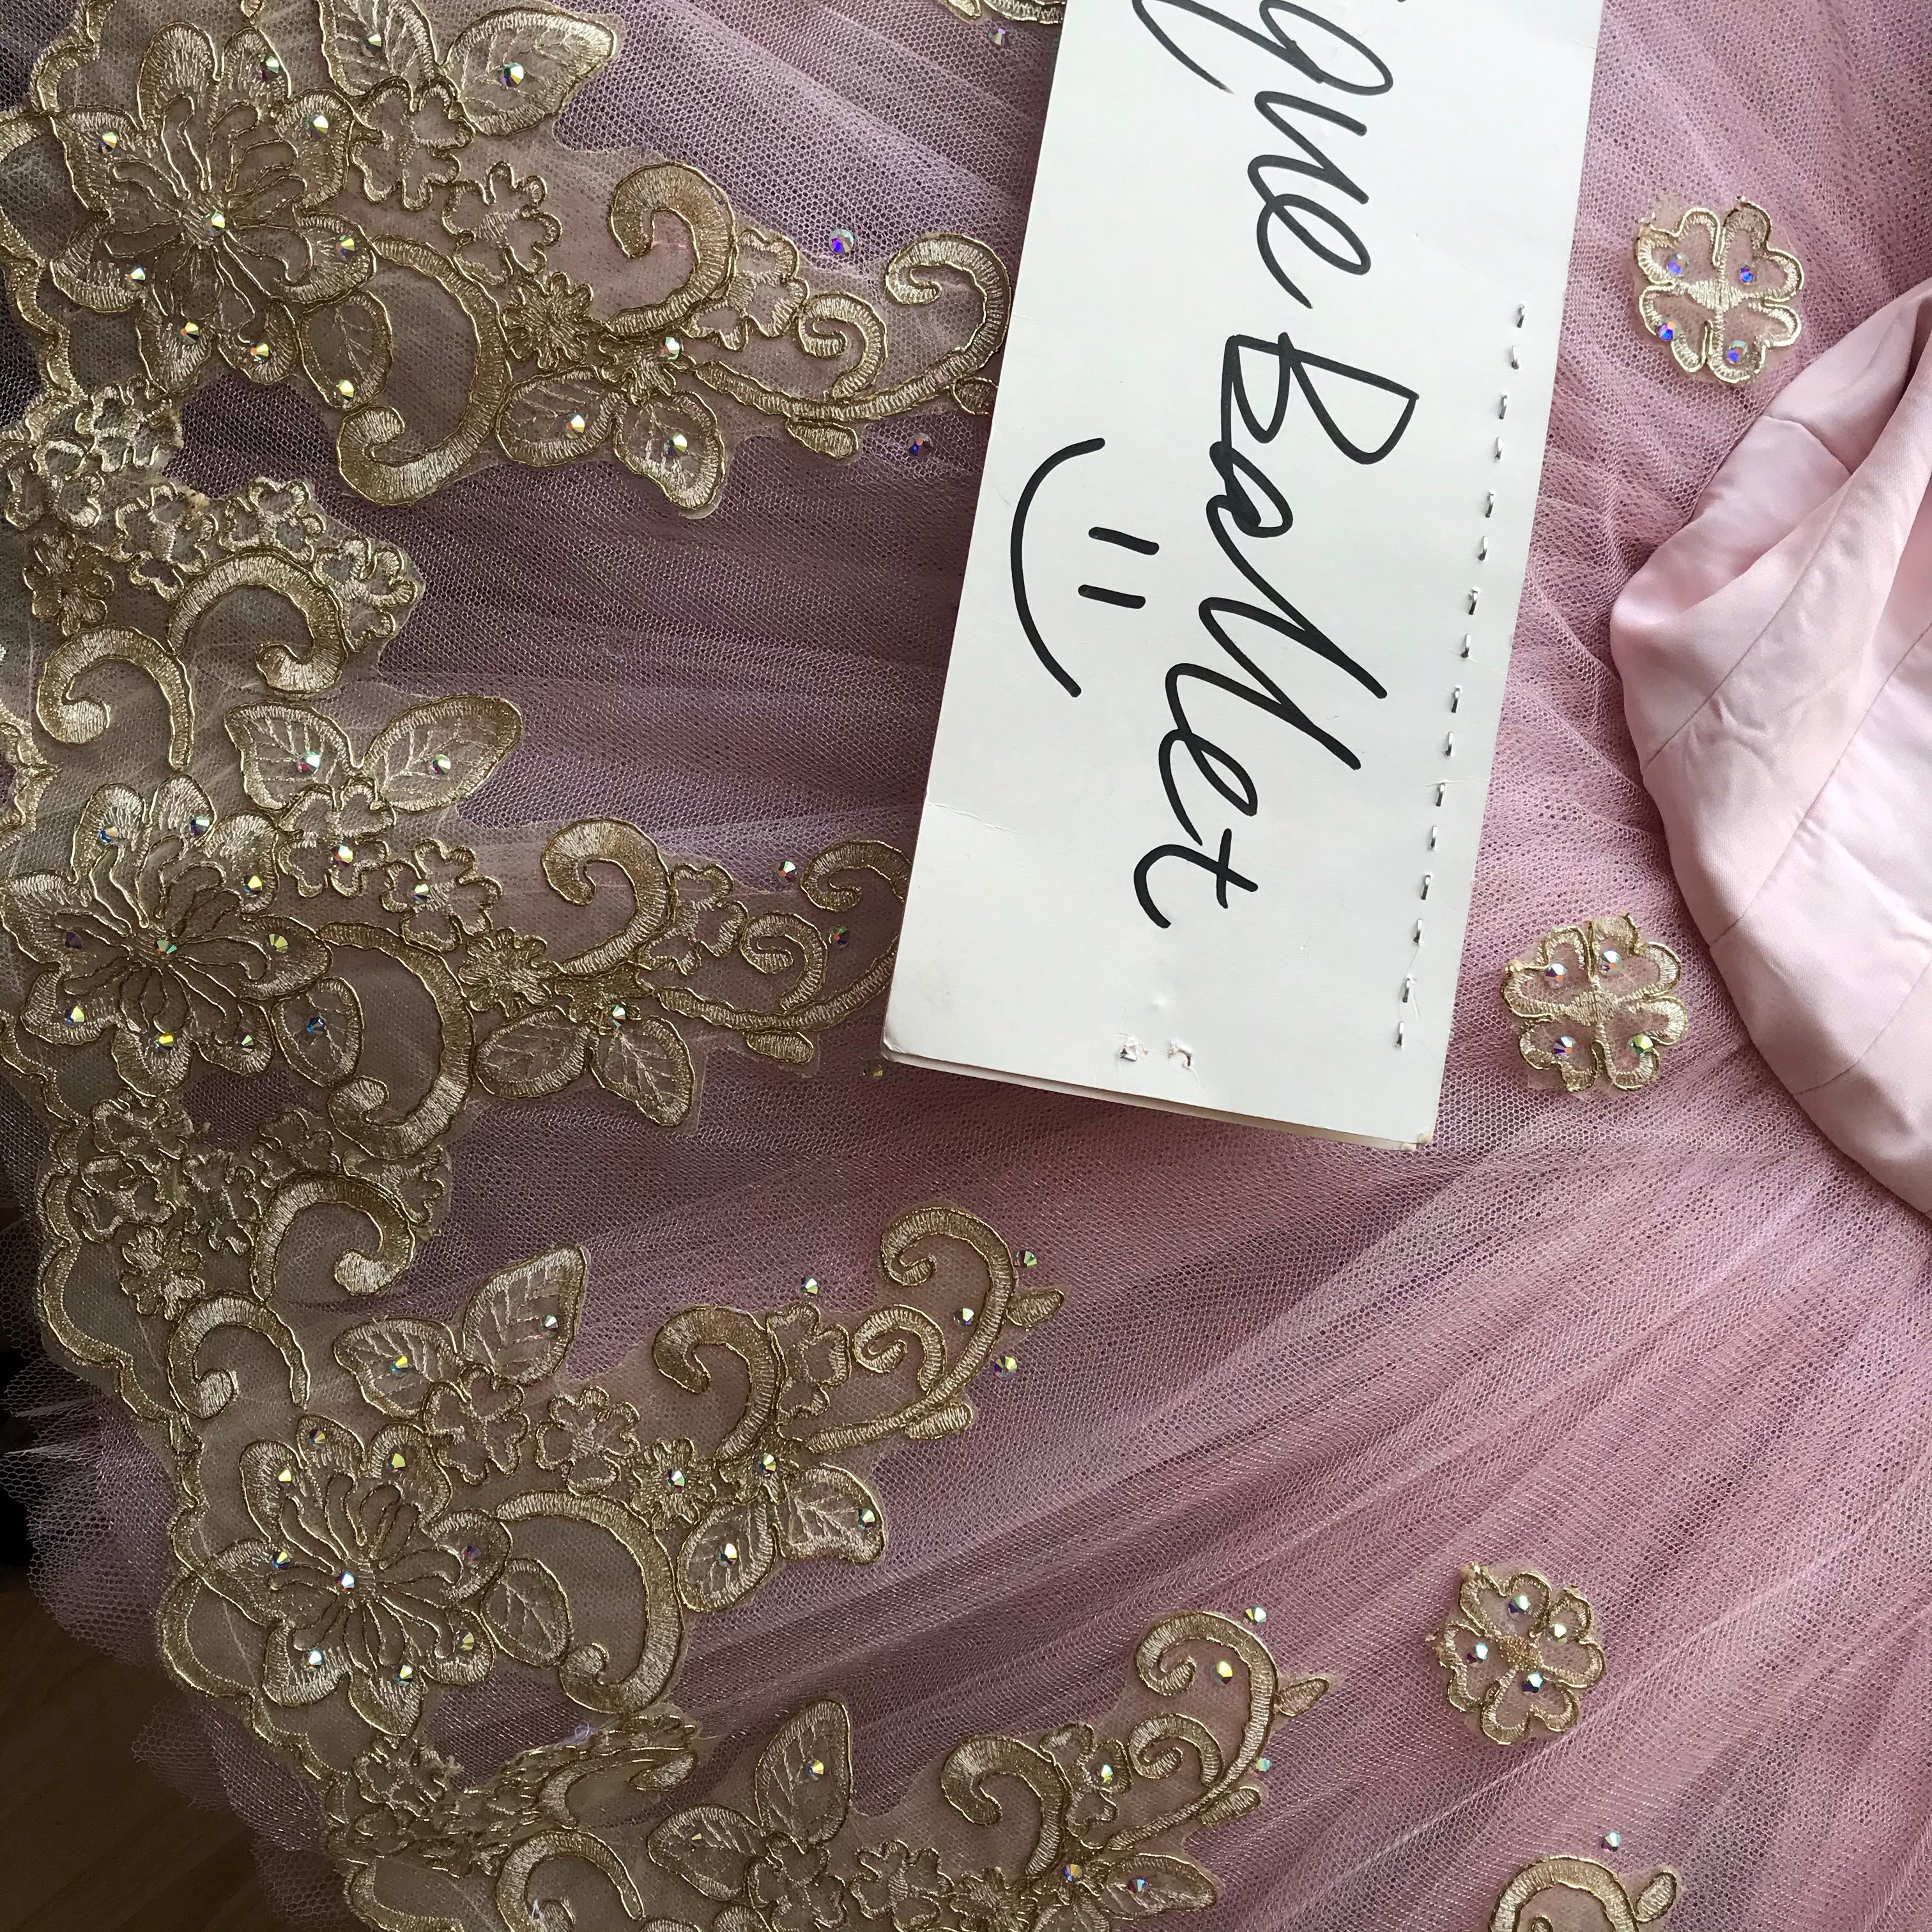 Professional Pink Sleeping Beauty Princess Aurora Classic Ballet TuTu Costume With Hooks